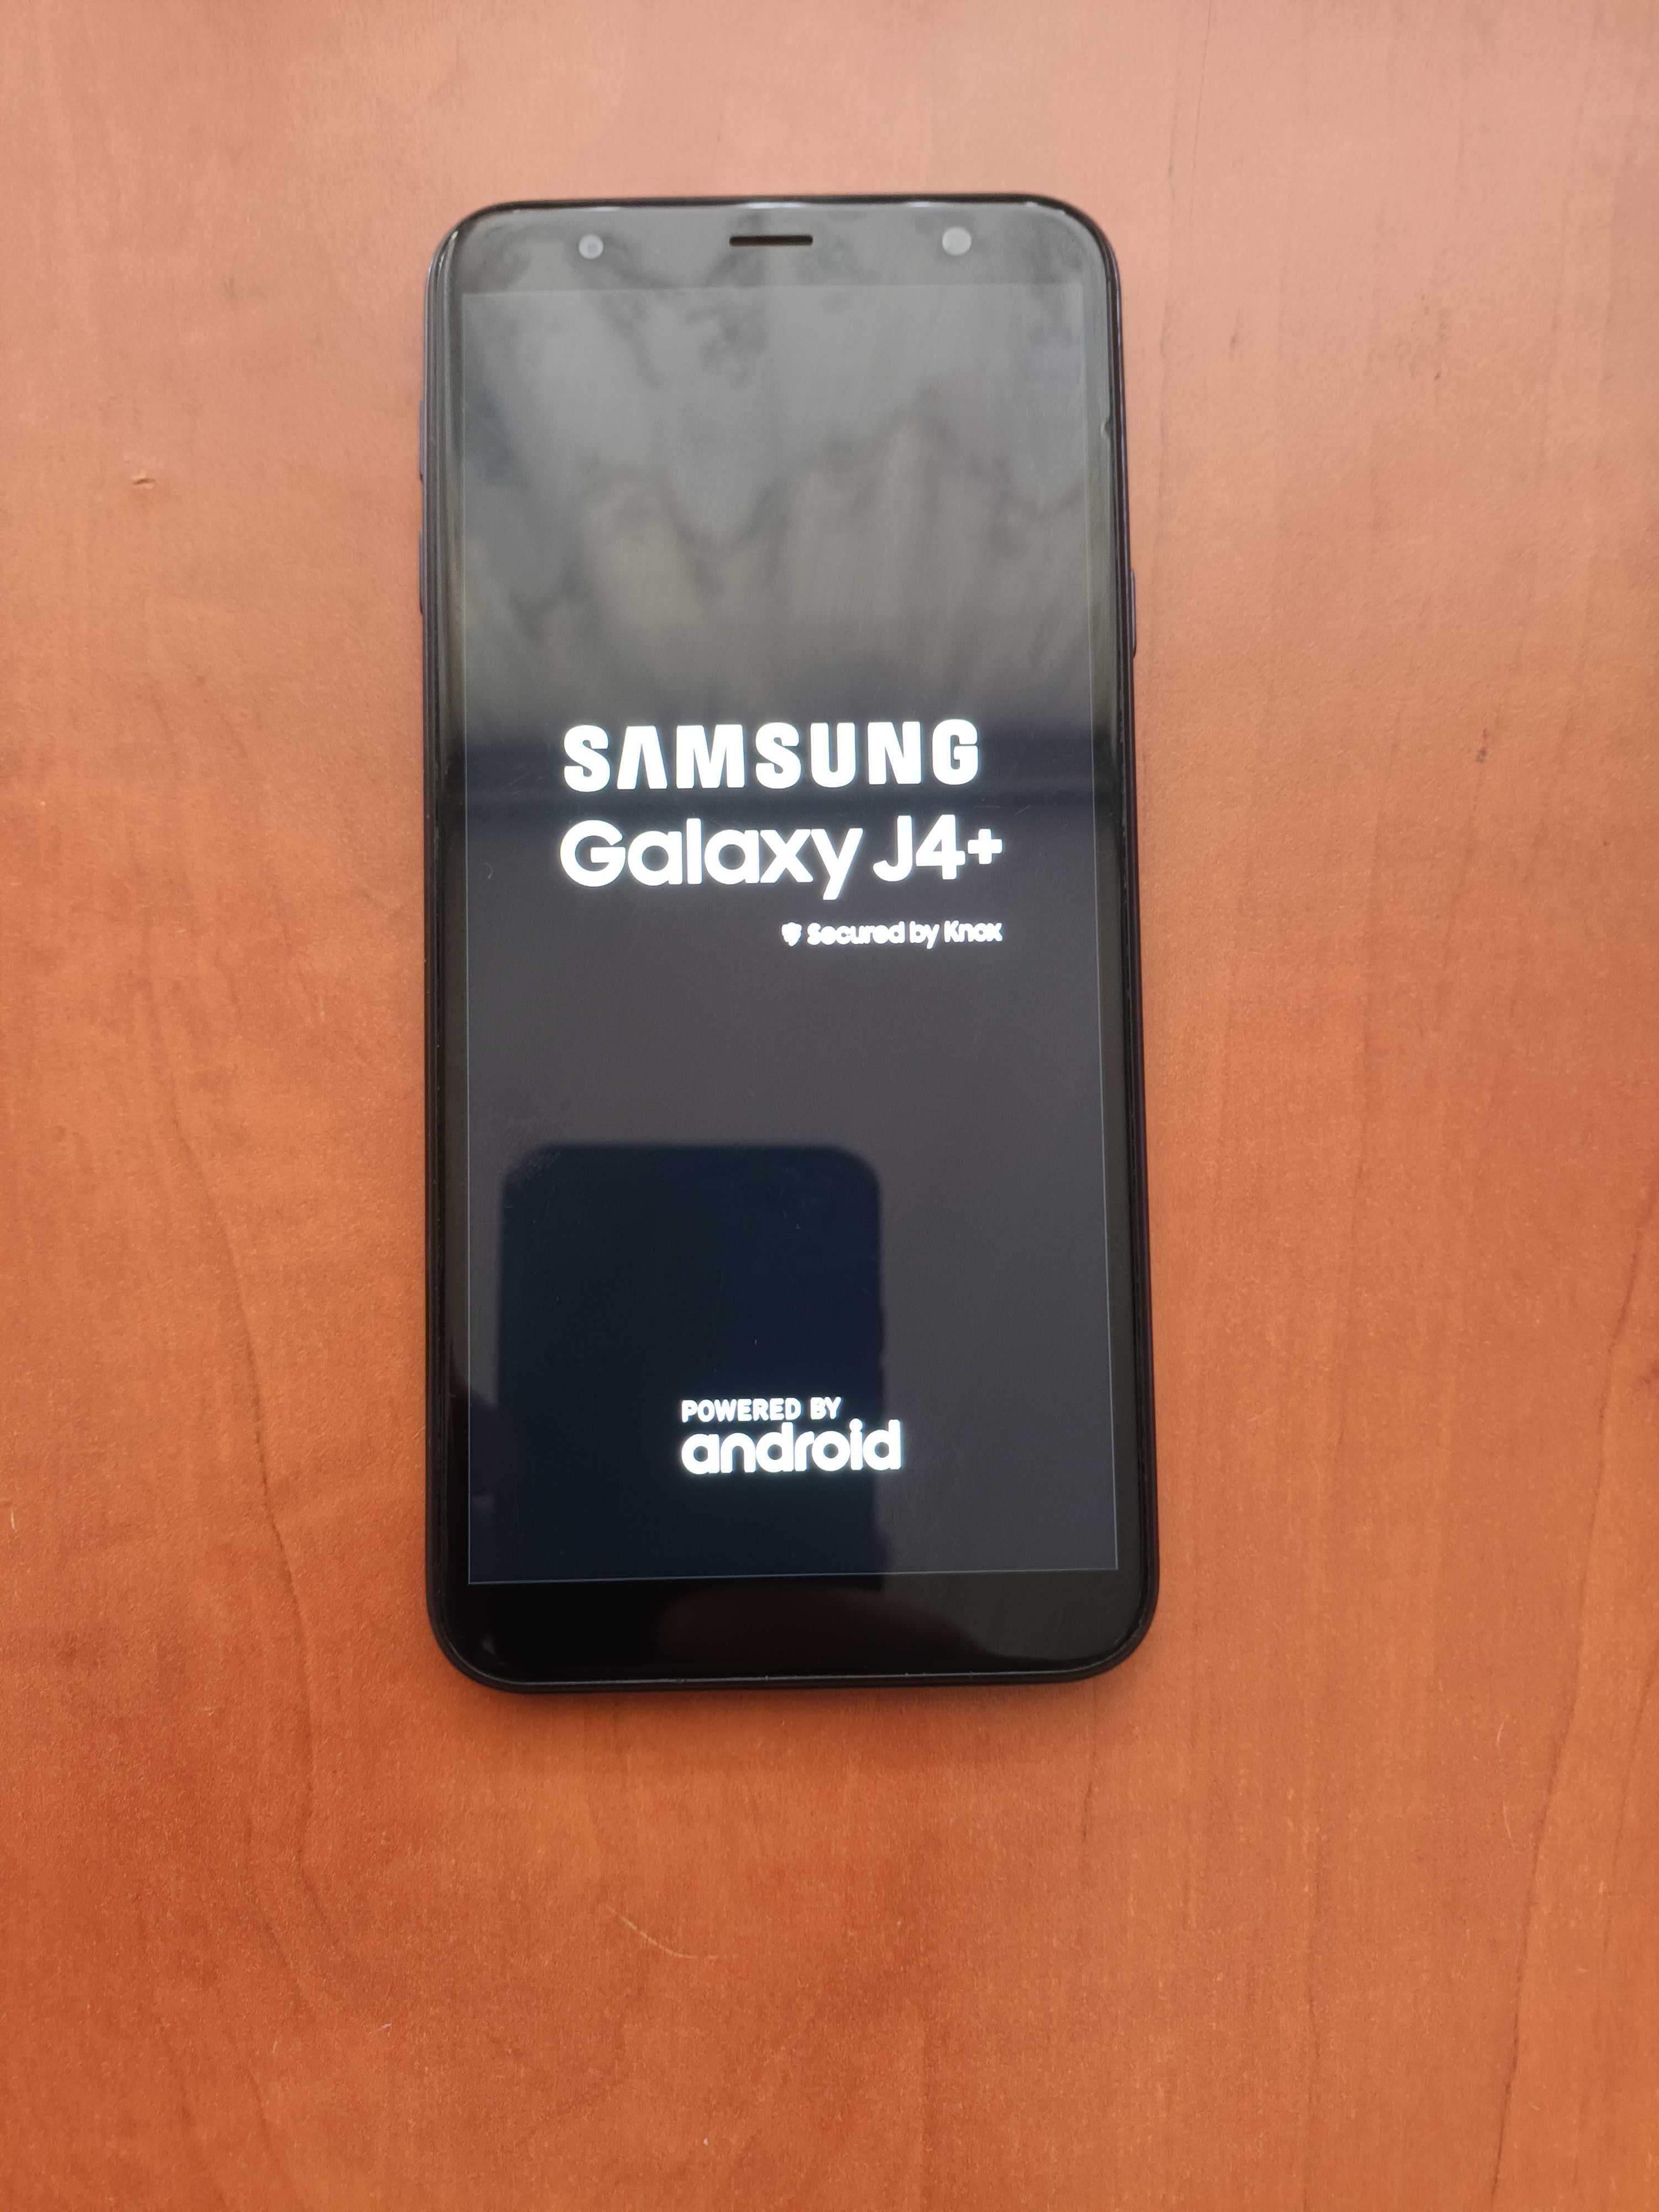 Telefon mobil  Samsung Galaxy J4+ plus SM-J415FN/DS 32GB 2GB